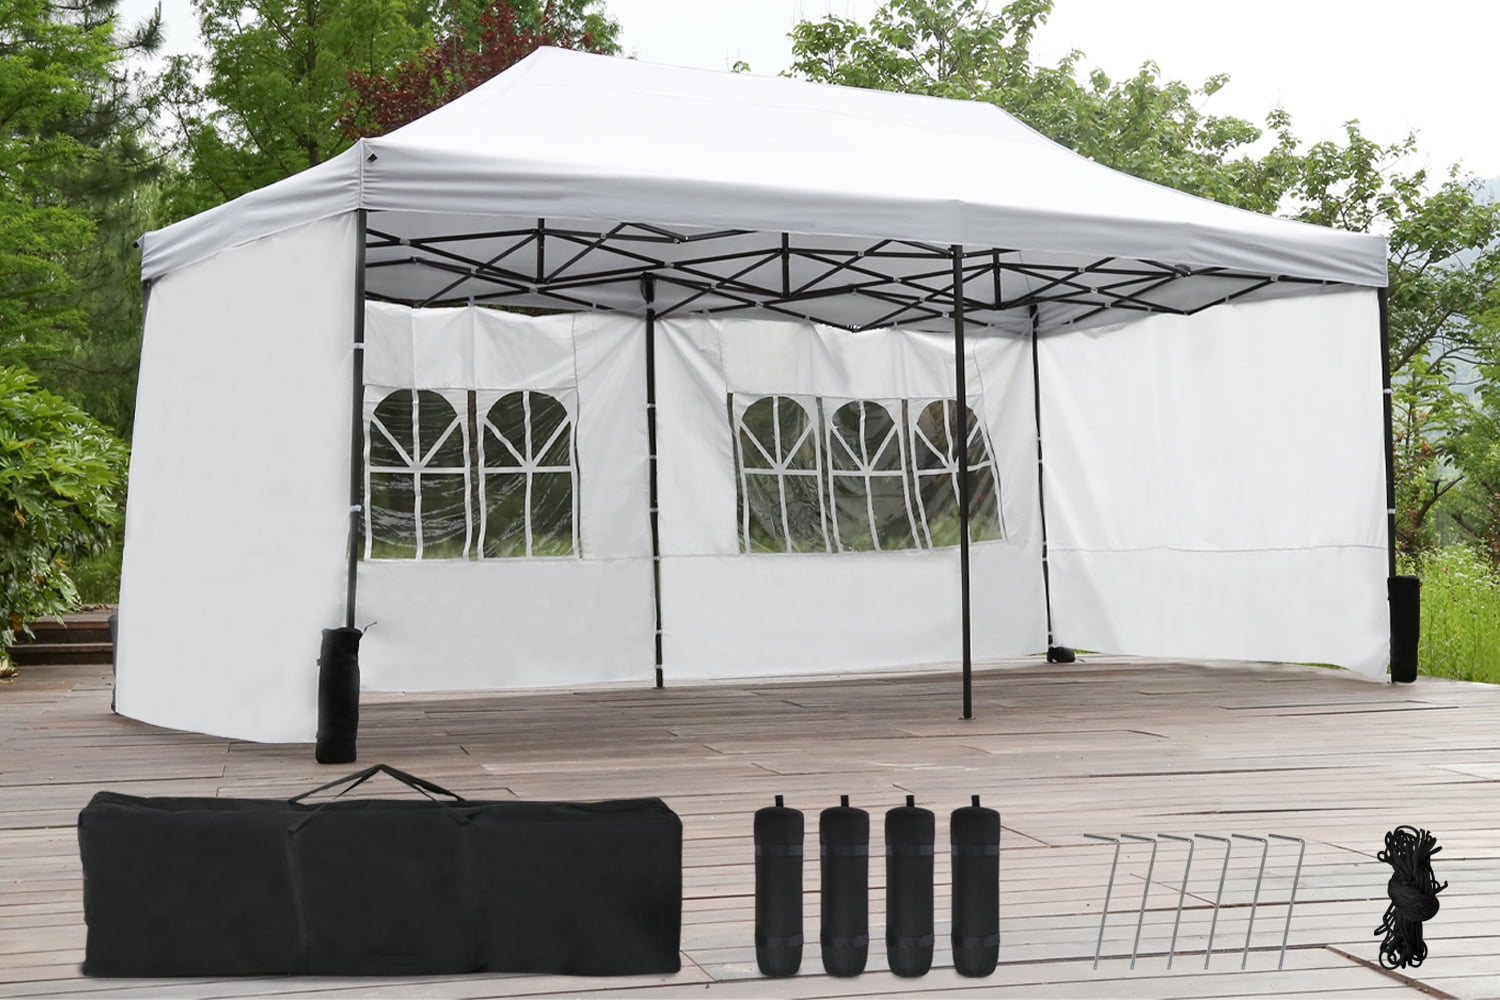 Details about   10 x20' EZ Pop UP Wedding Party Tent Folding Gazebo Canopy Heavy Duty Carry Case 